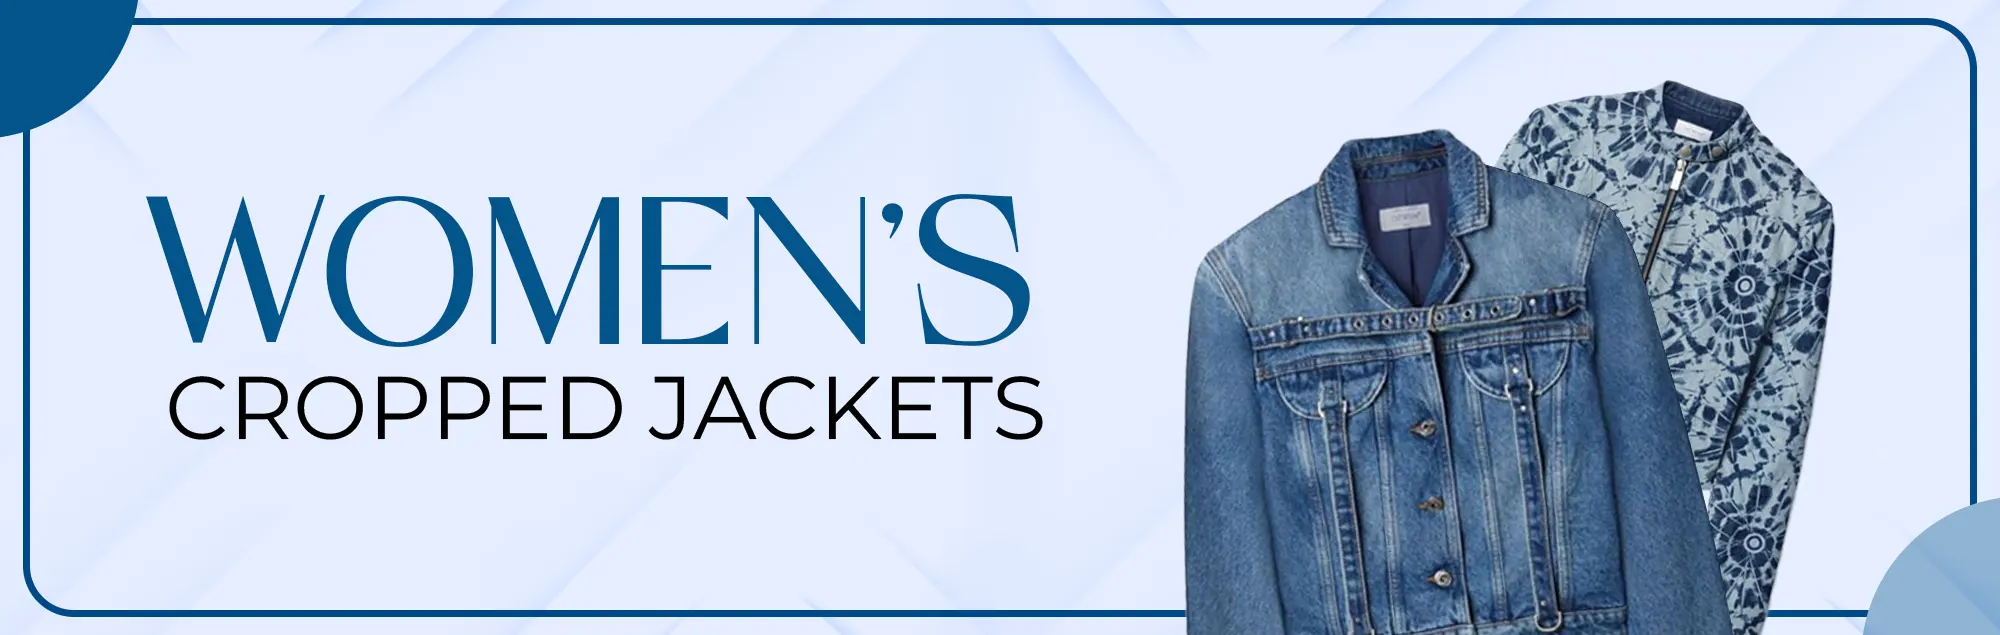 Women's Cropped Jackets